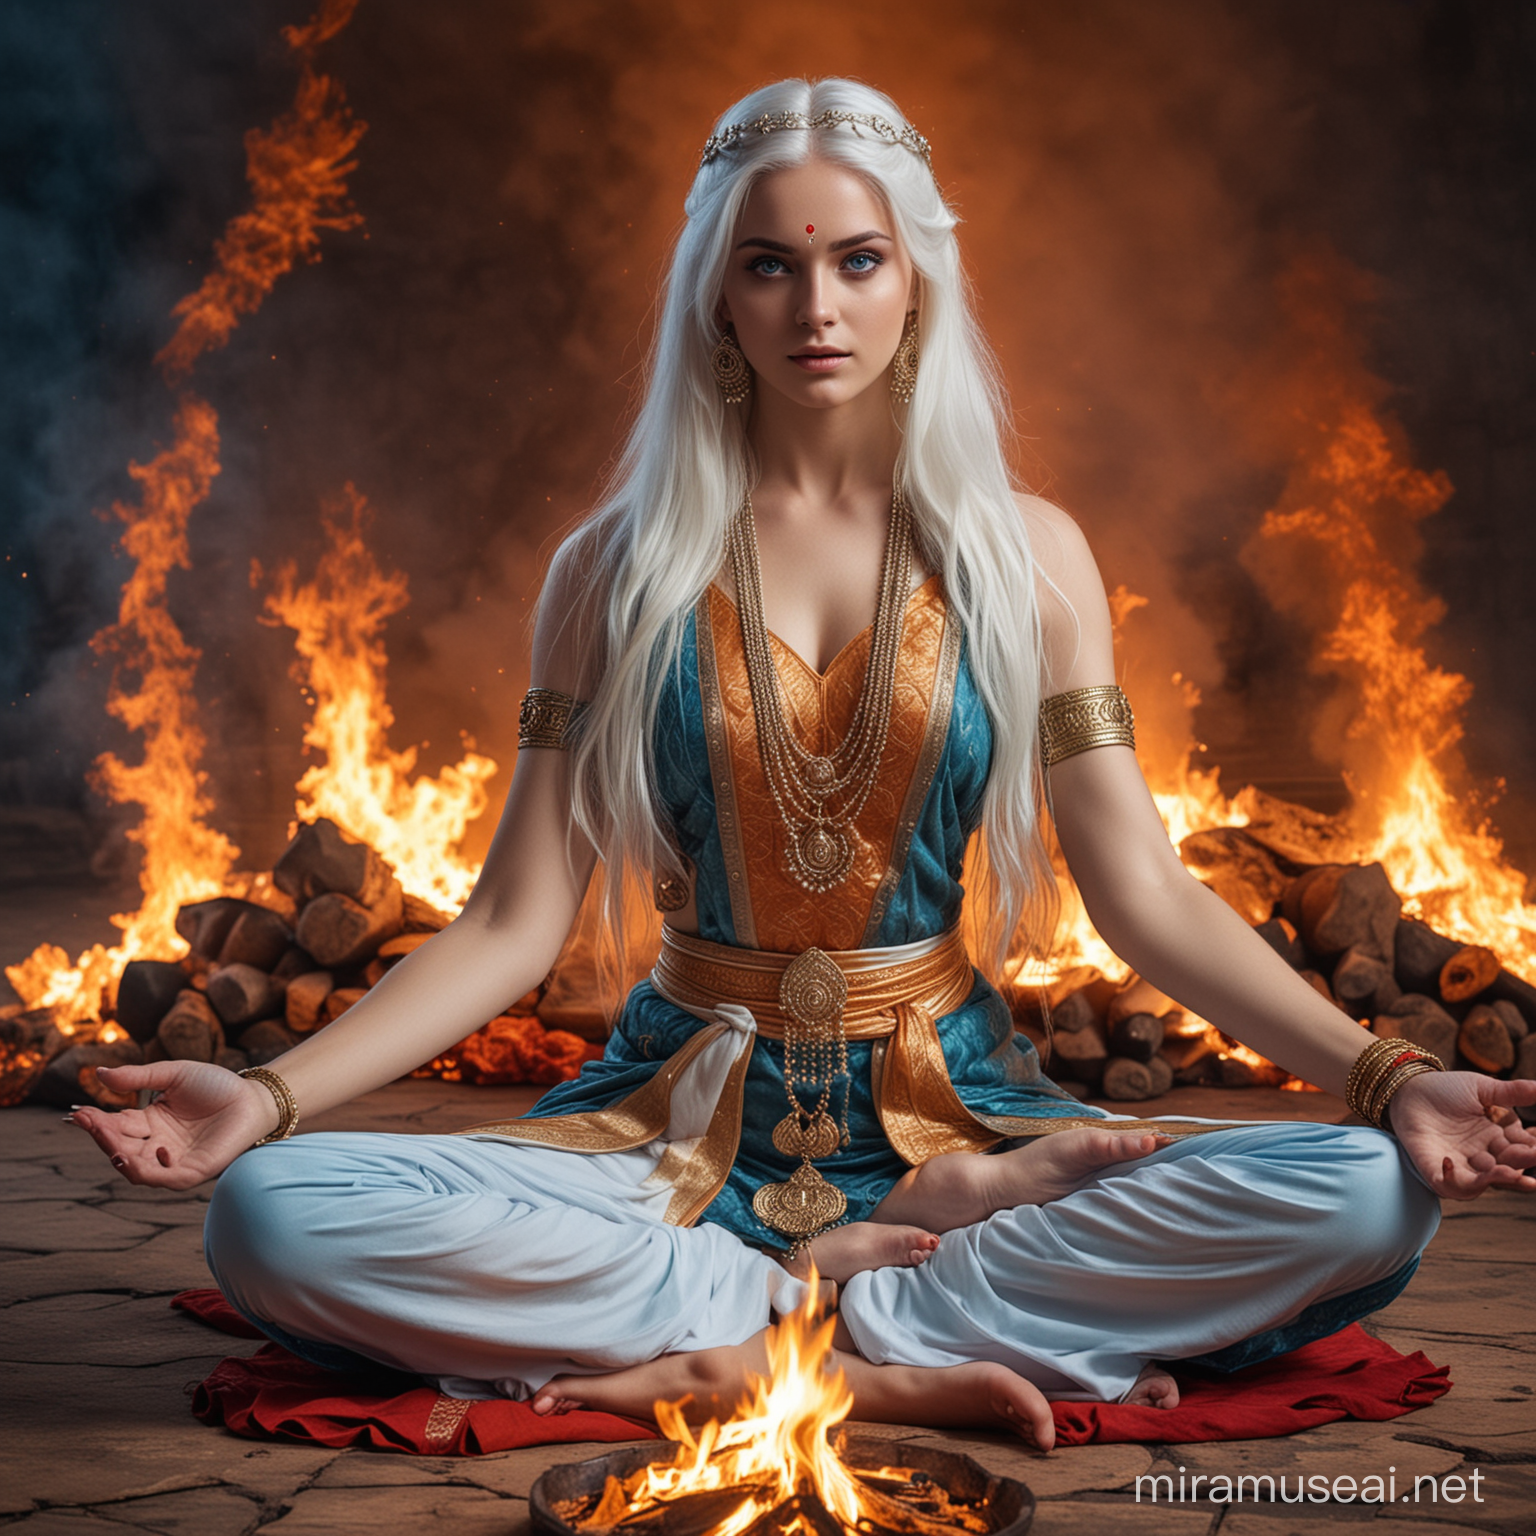 Hindu Empress in Meditation Amidst Fiery Surroundings